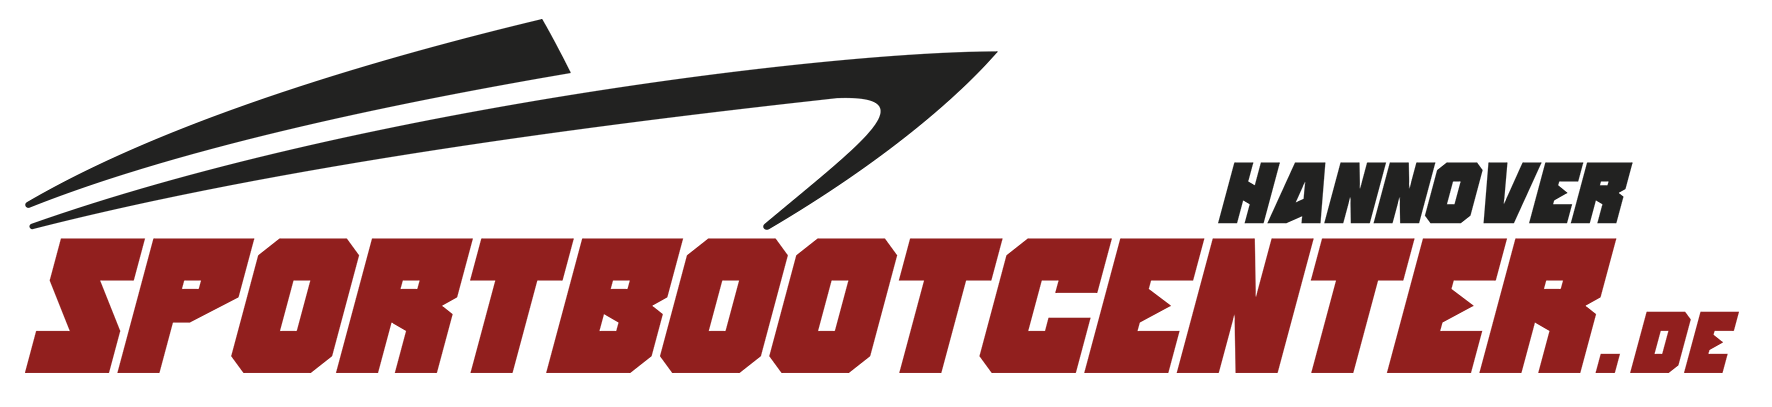 Logo sportbootcenter